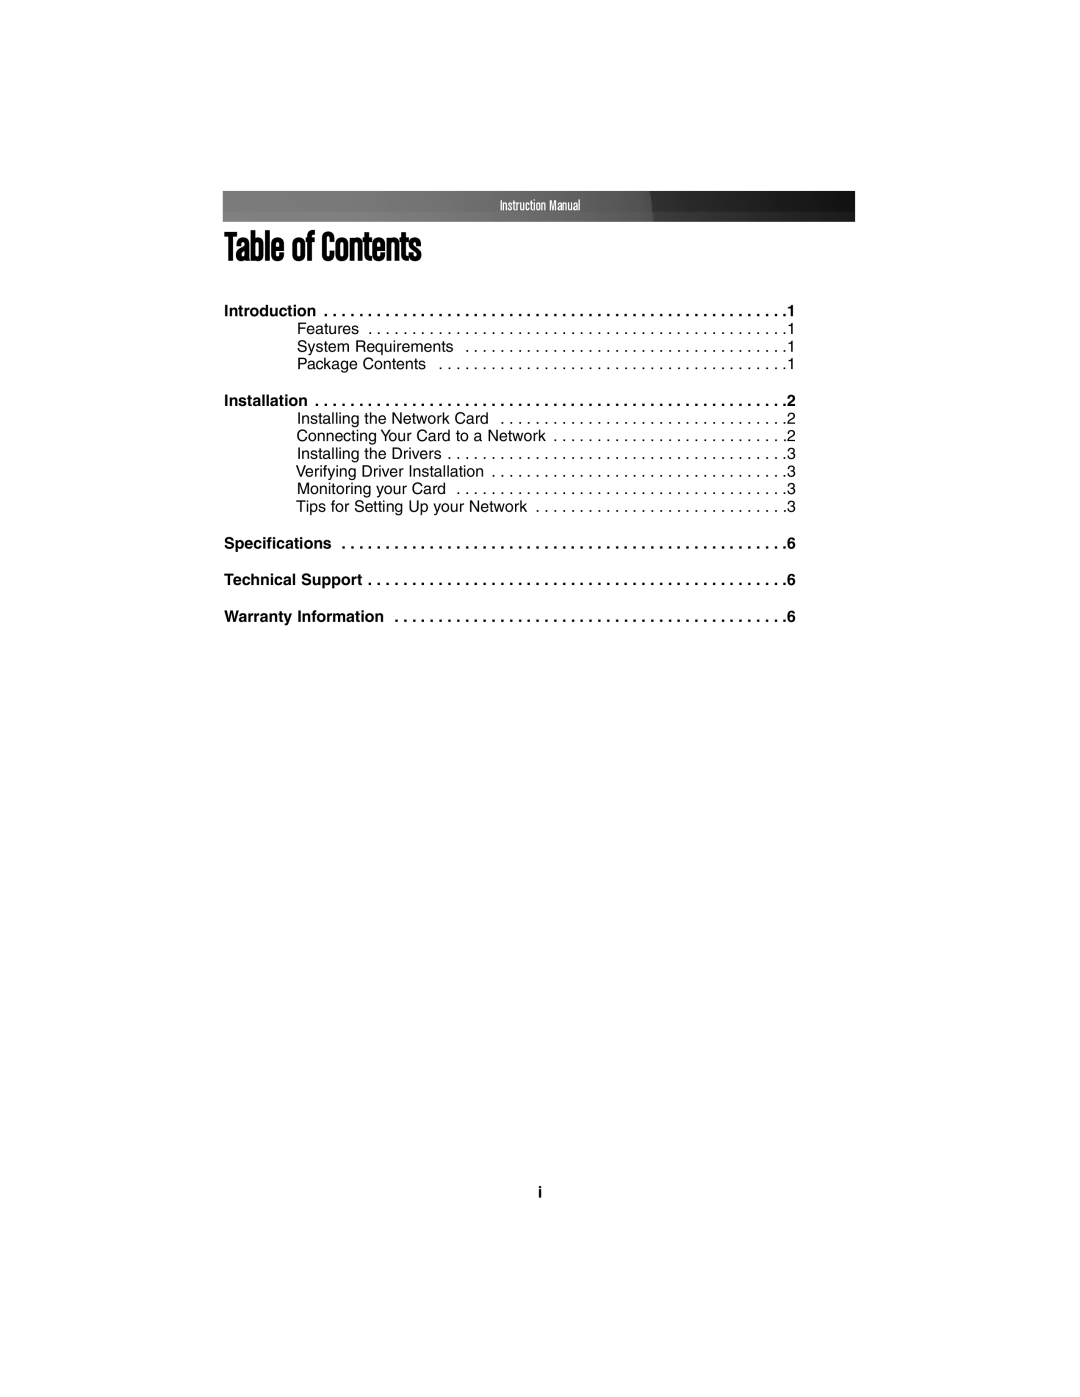 StarTech.com ST100SLP instruction manual Table of Contents 